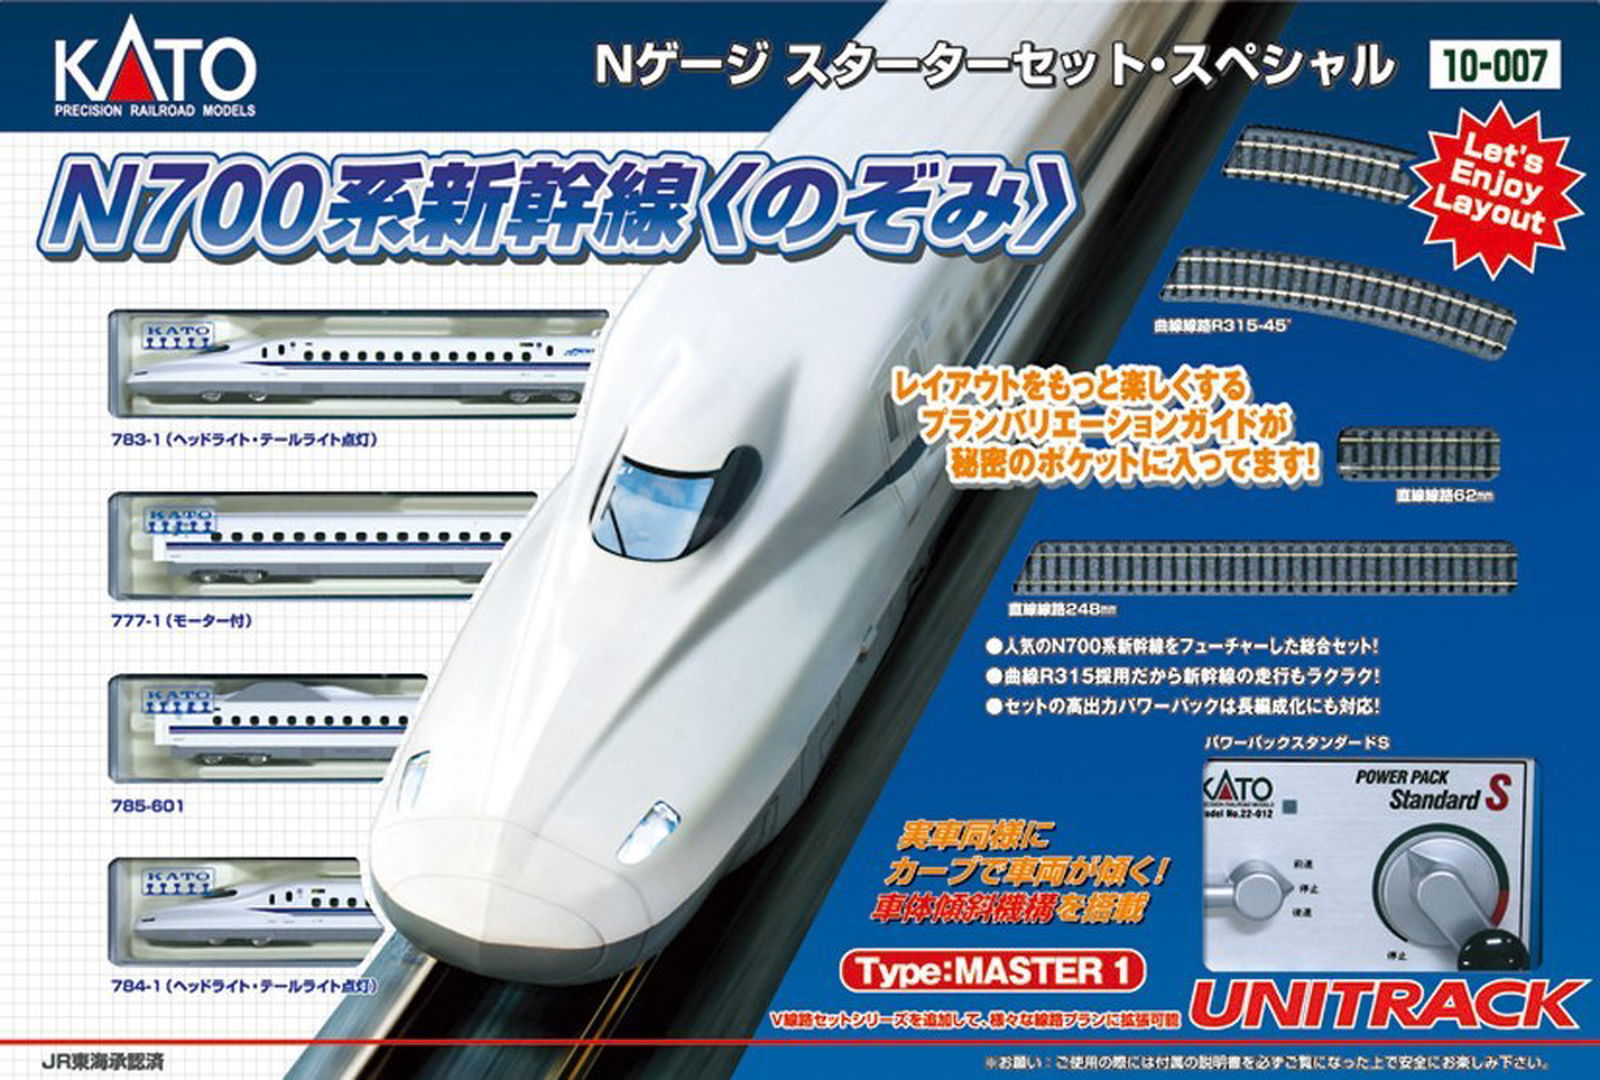 KATO 10-007 Starter Set Special Shinkansen Series N700 Nozomi - BanzaiHobby